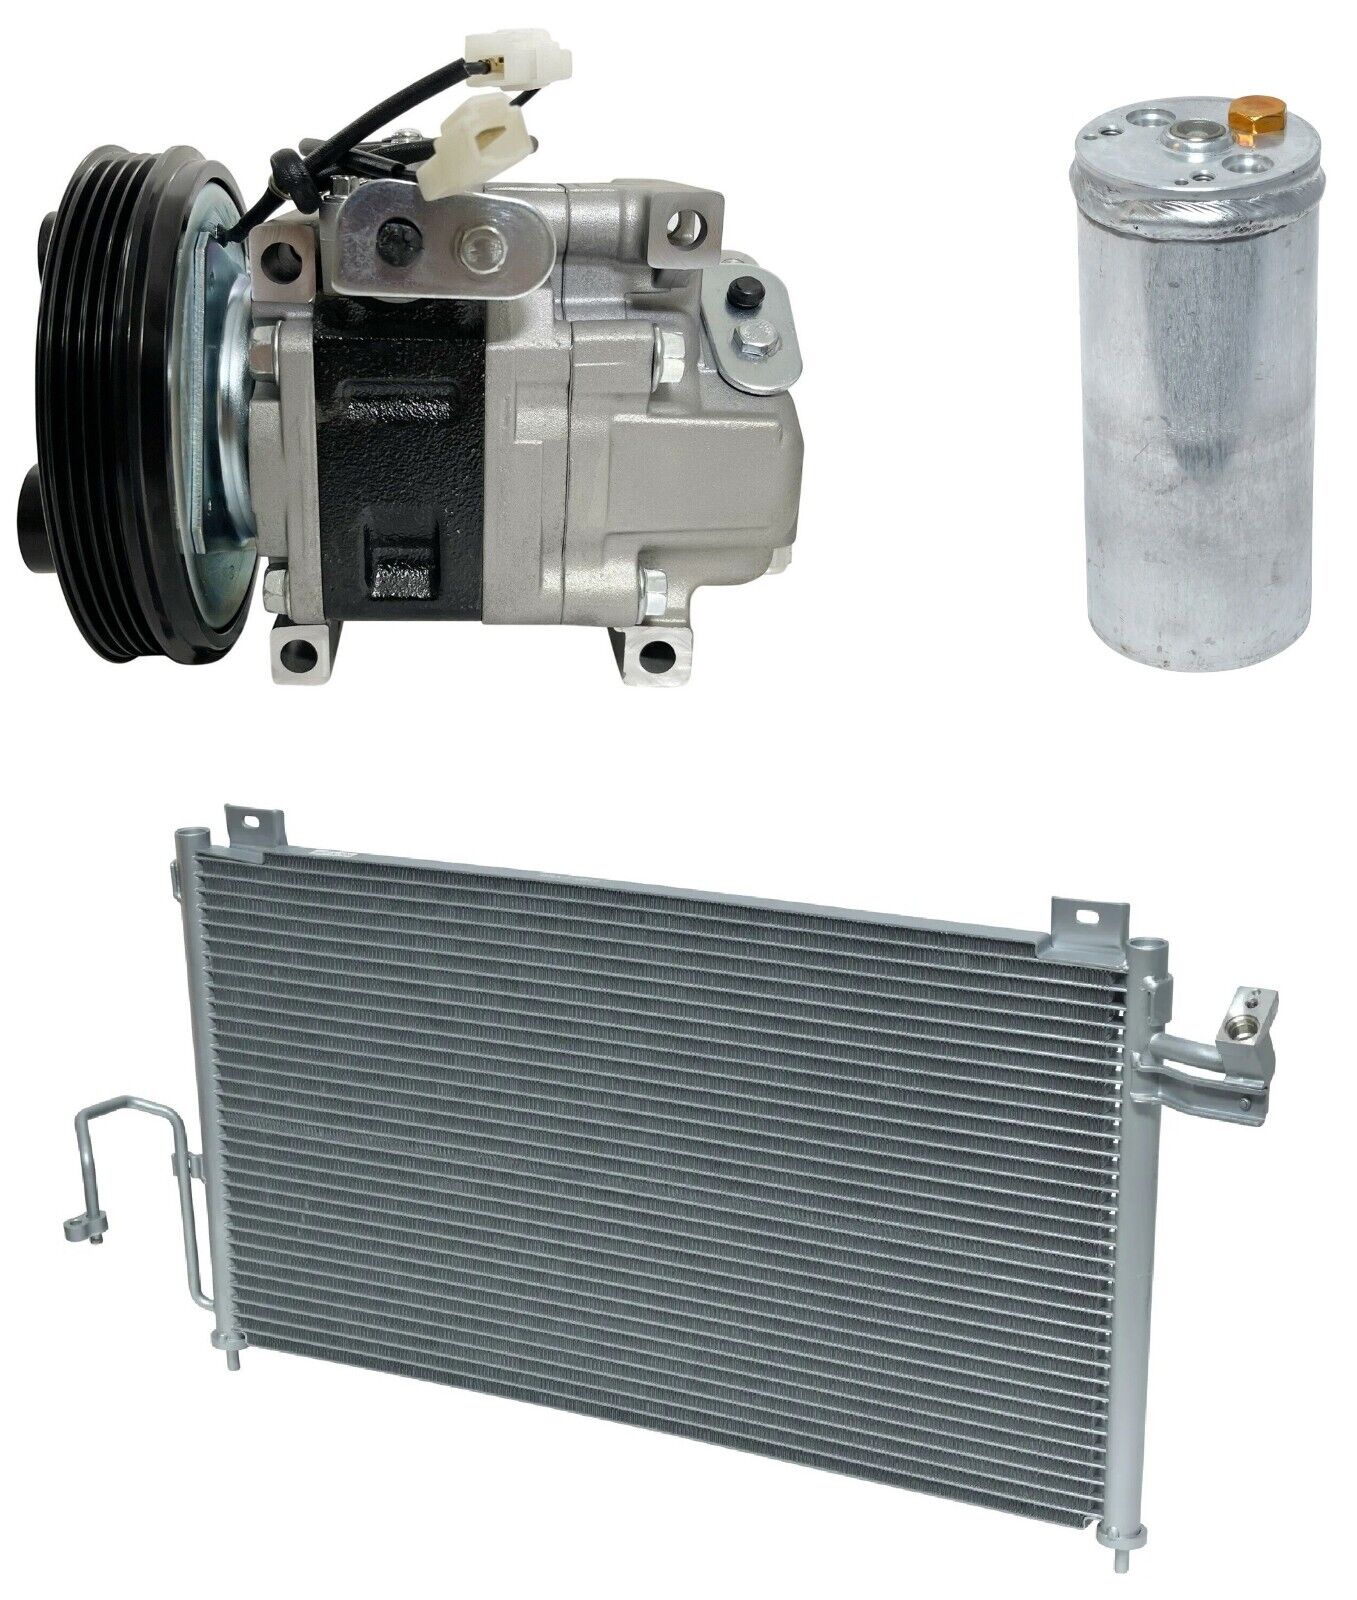 BRAND NEW RYC AC Compressor Kit W/ Condenser FH480 Fits Mazda Protege 1.6L 2001